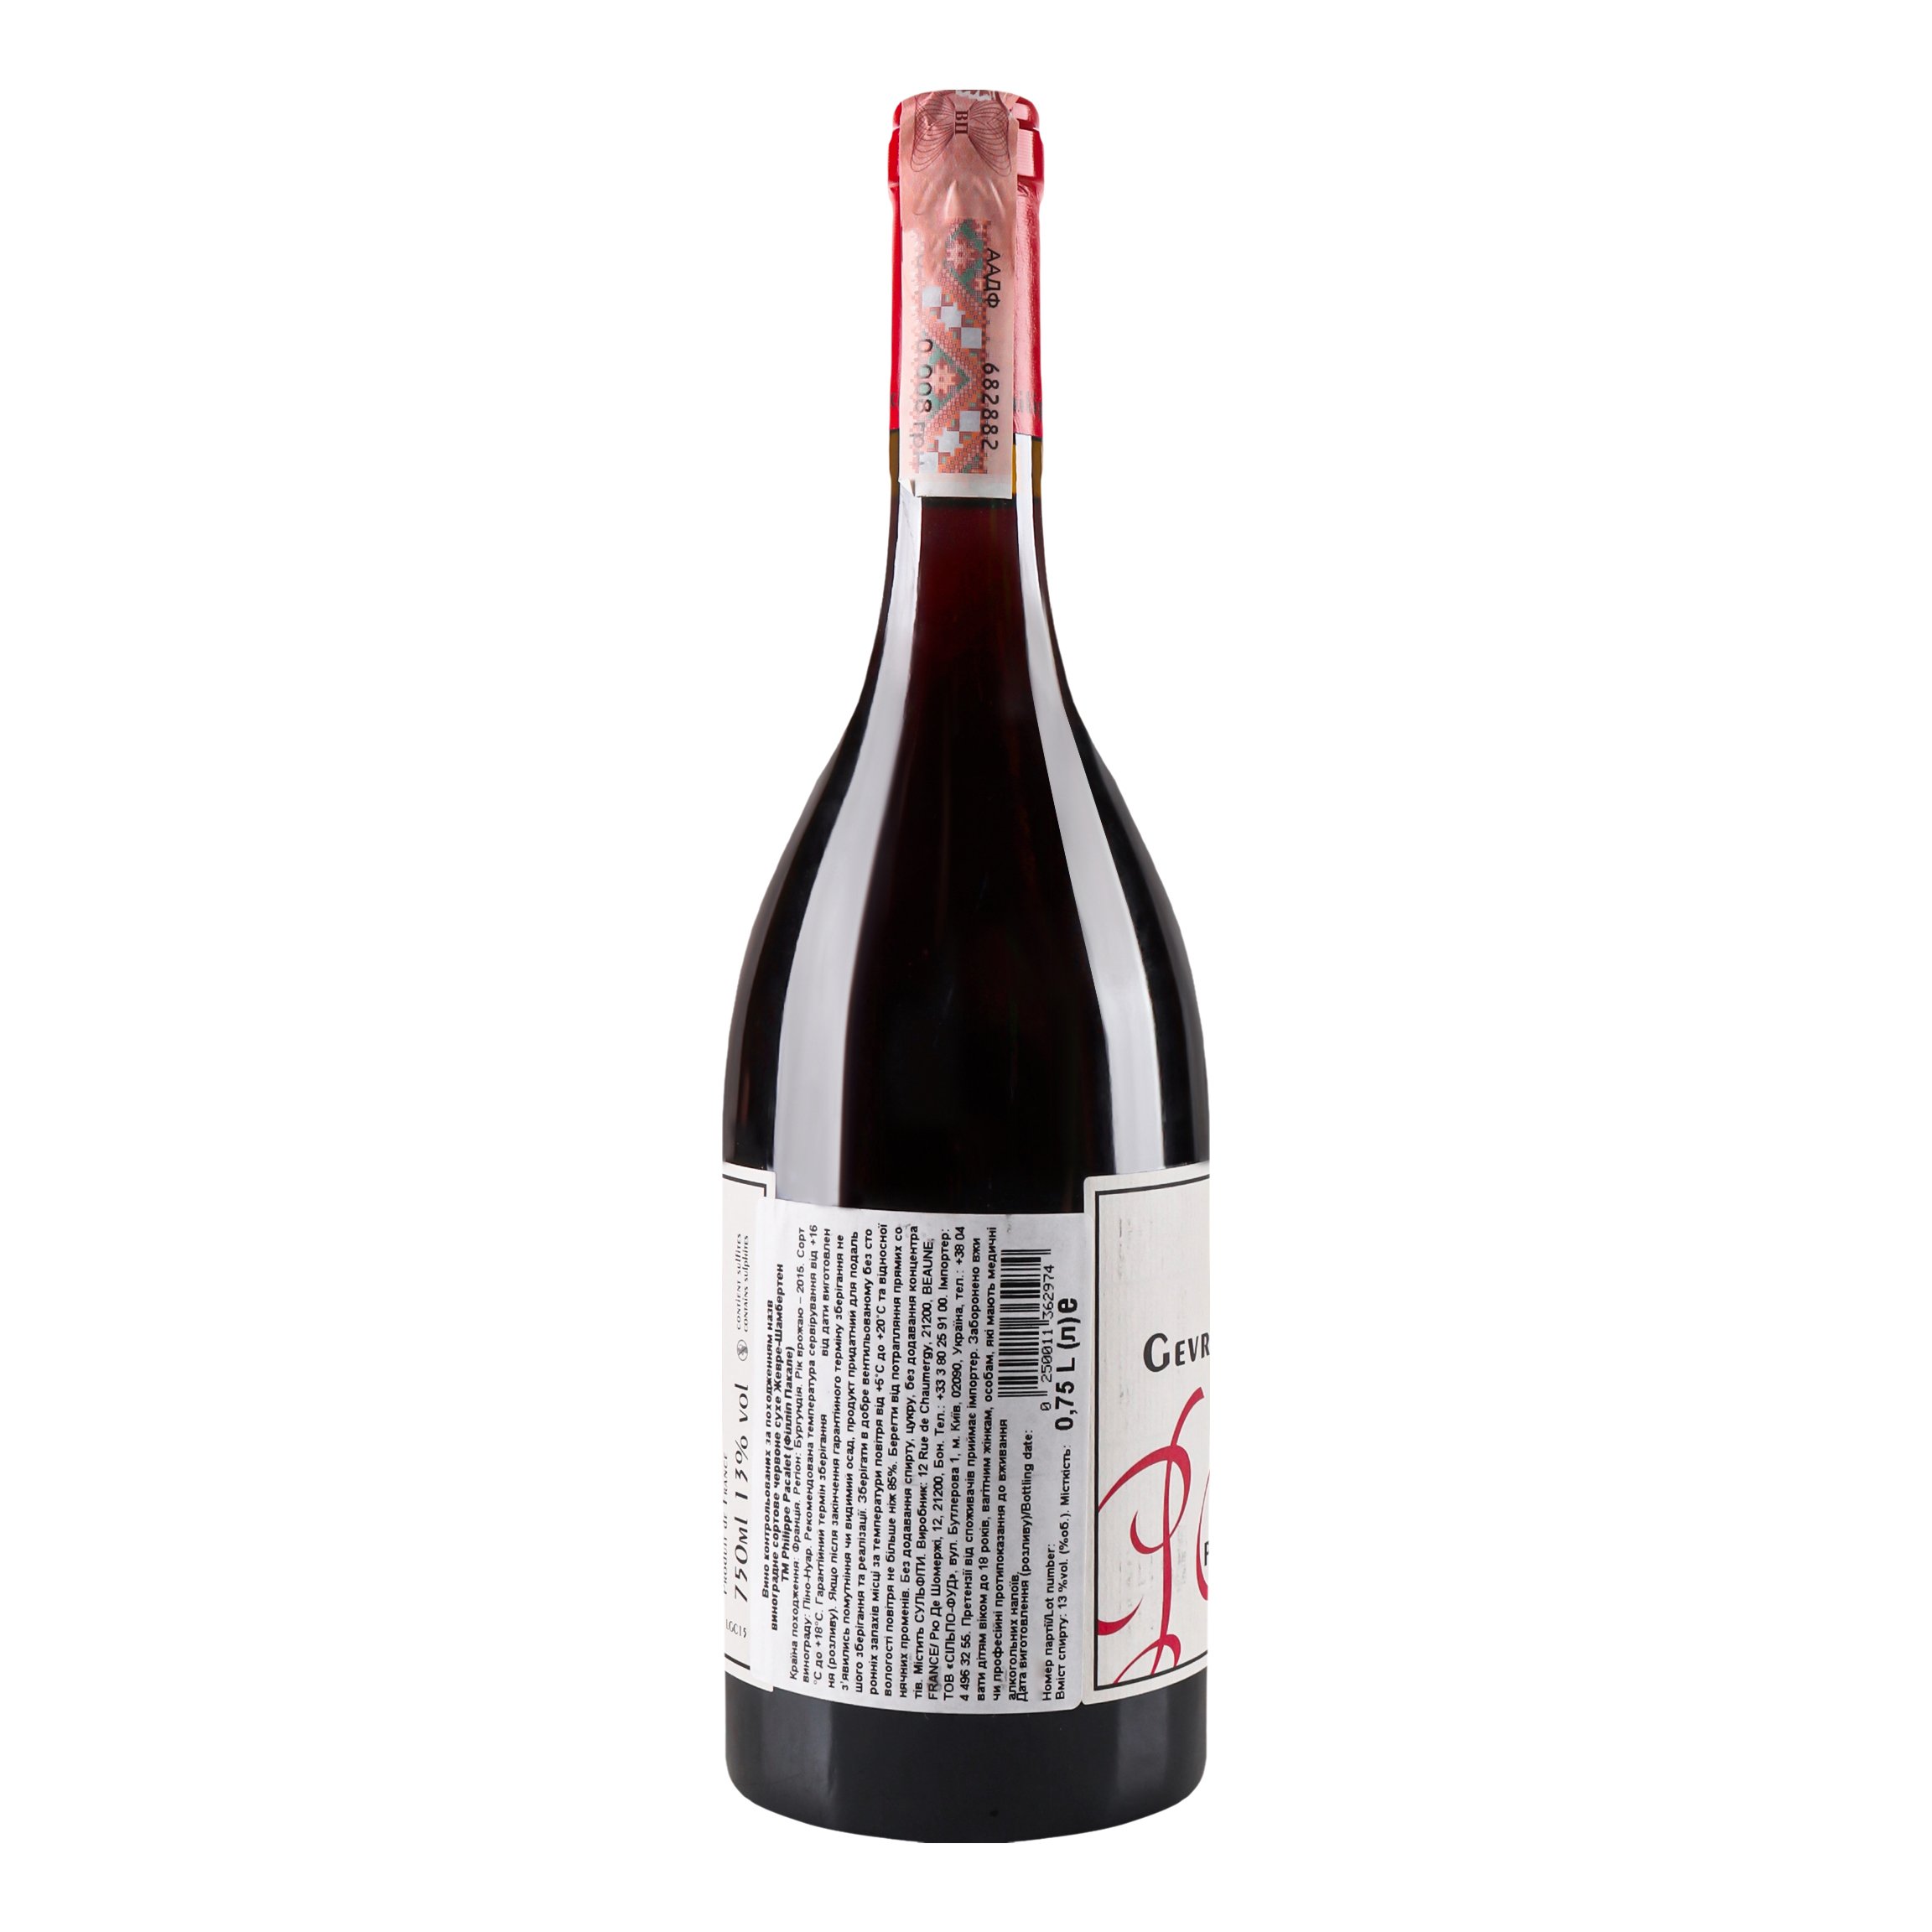 Вино Philippe Pacalet Gevrey-Chambertin 2015 AOC/AOP, 13%, 0,75 л (801592) - фото 4